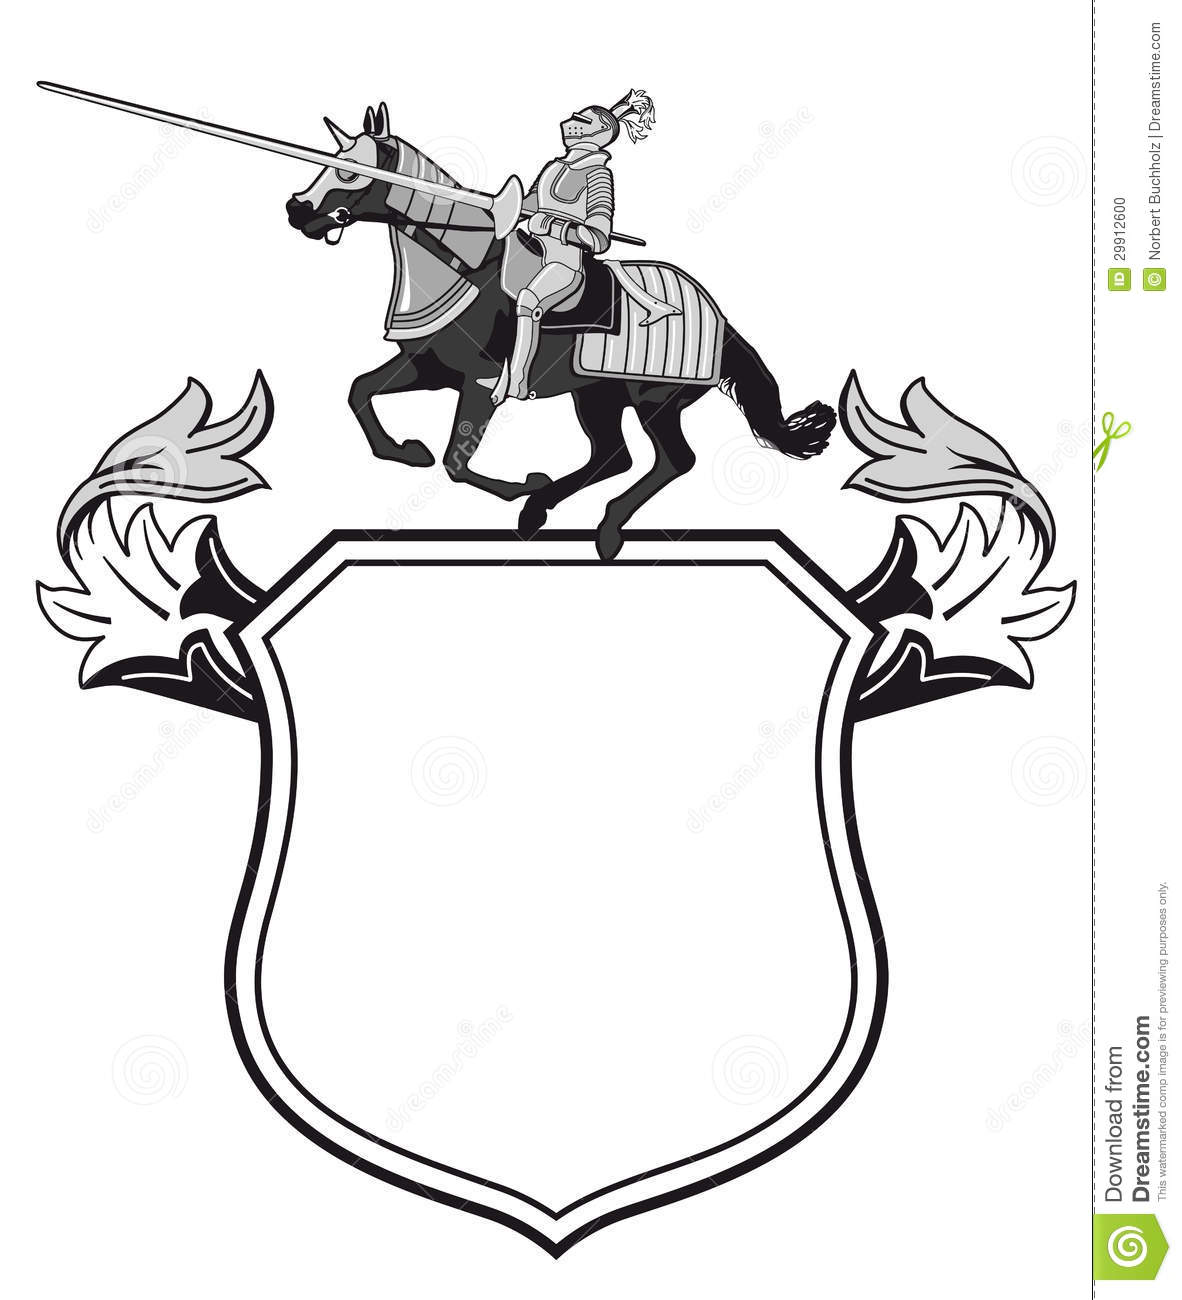 heraldic cliparts knight